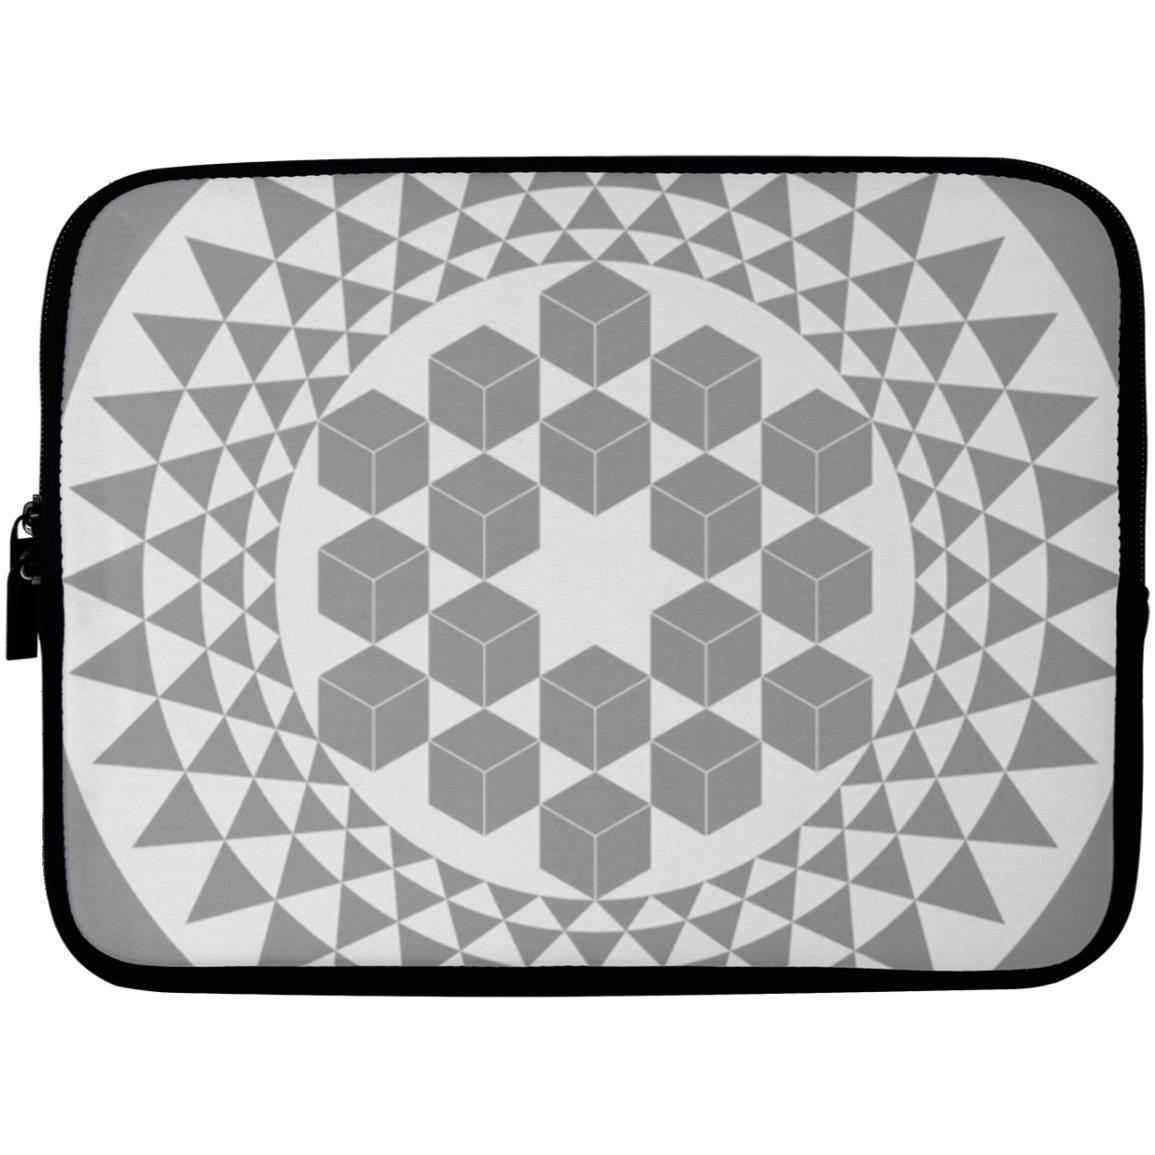 Crop Circle Laptop Sleeve - Sugar Hill - Shapes of Wisdom